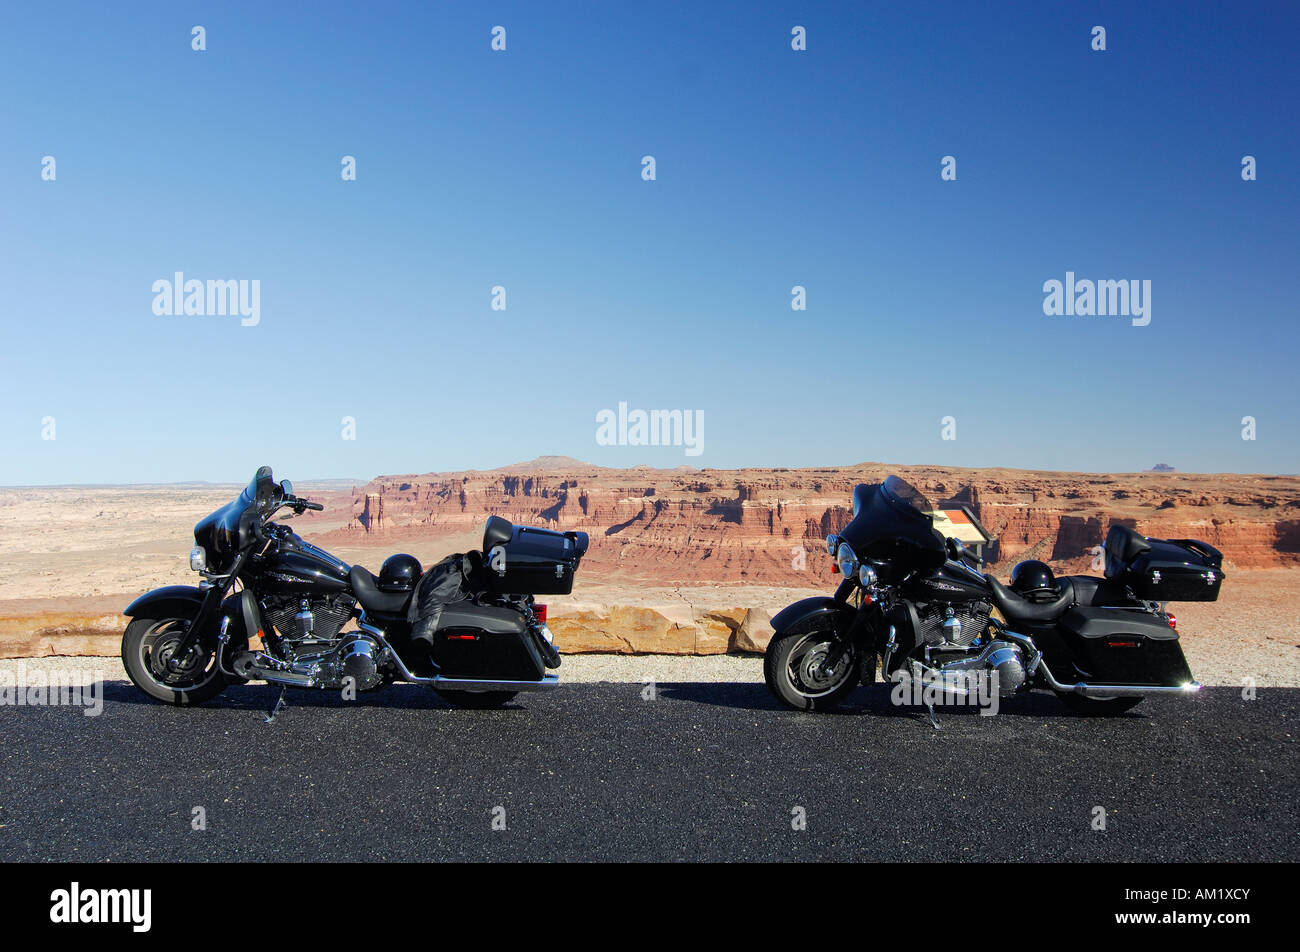 Due motocycles, Harley Davidson, parcheggio su strada, Utah, Stati Uniti d'America Foto Stock